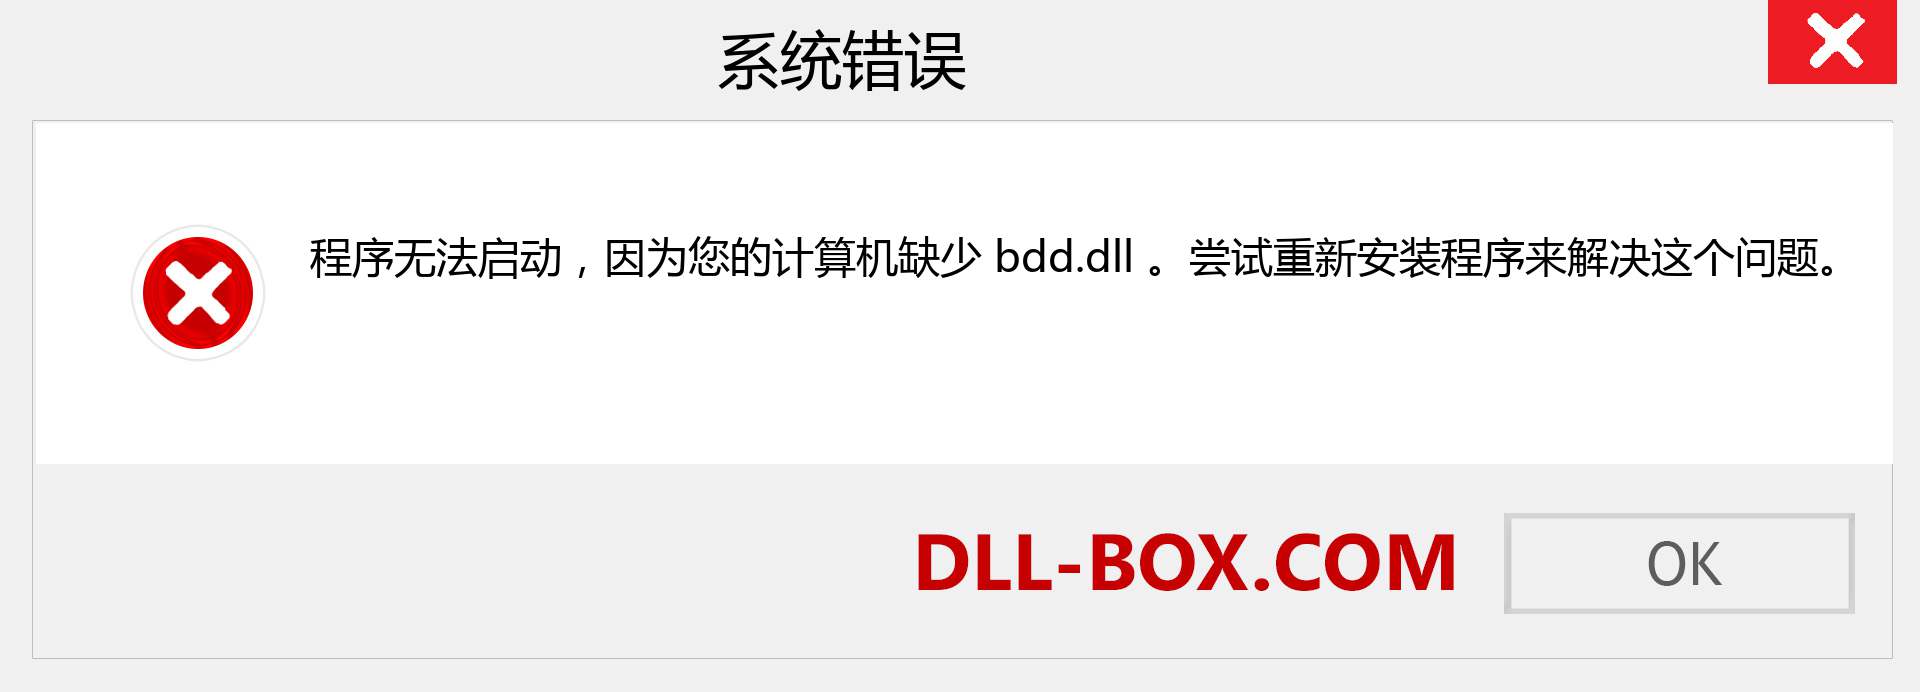 bdd.dll 文件丢失？。 适用于 Windows 7、8、10 的下载 - 修复 Windows、照片、图像上的 bdd dll 丢失错误